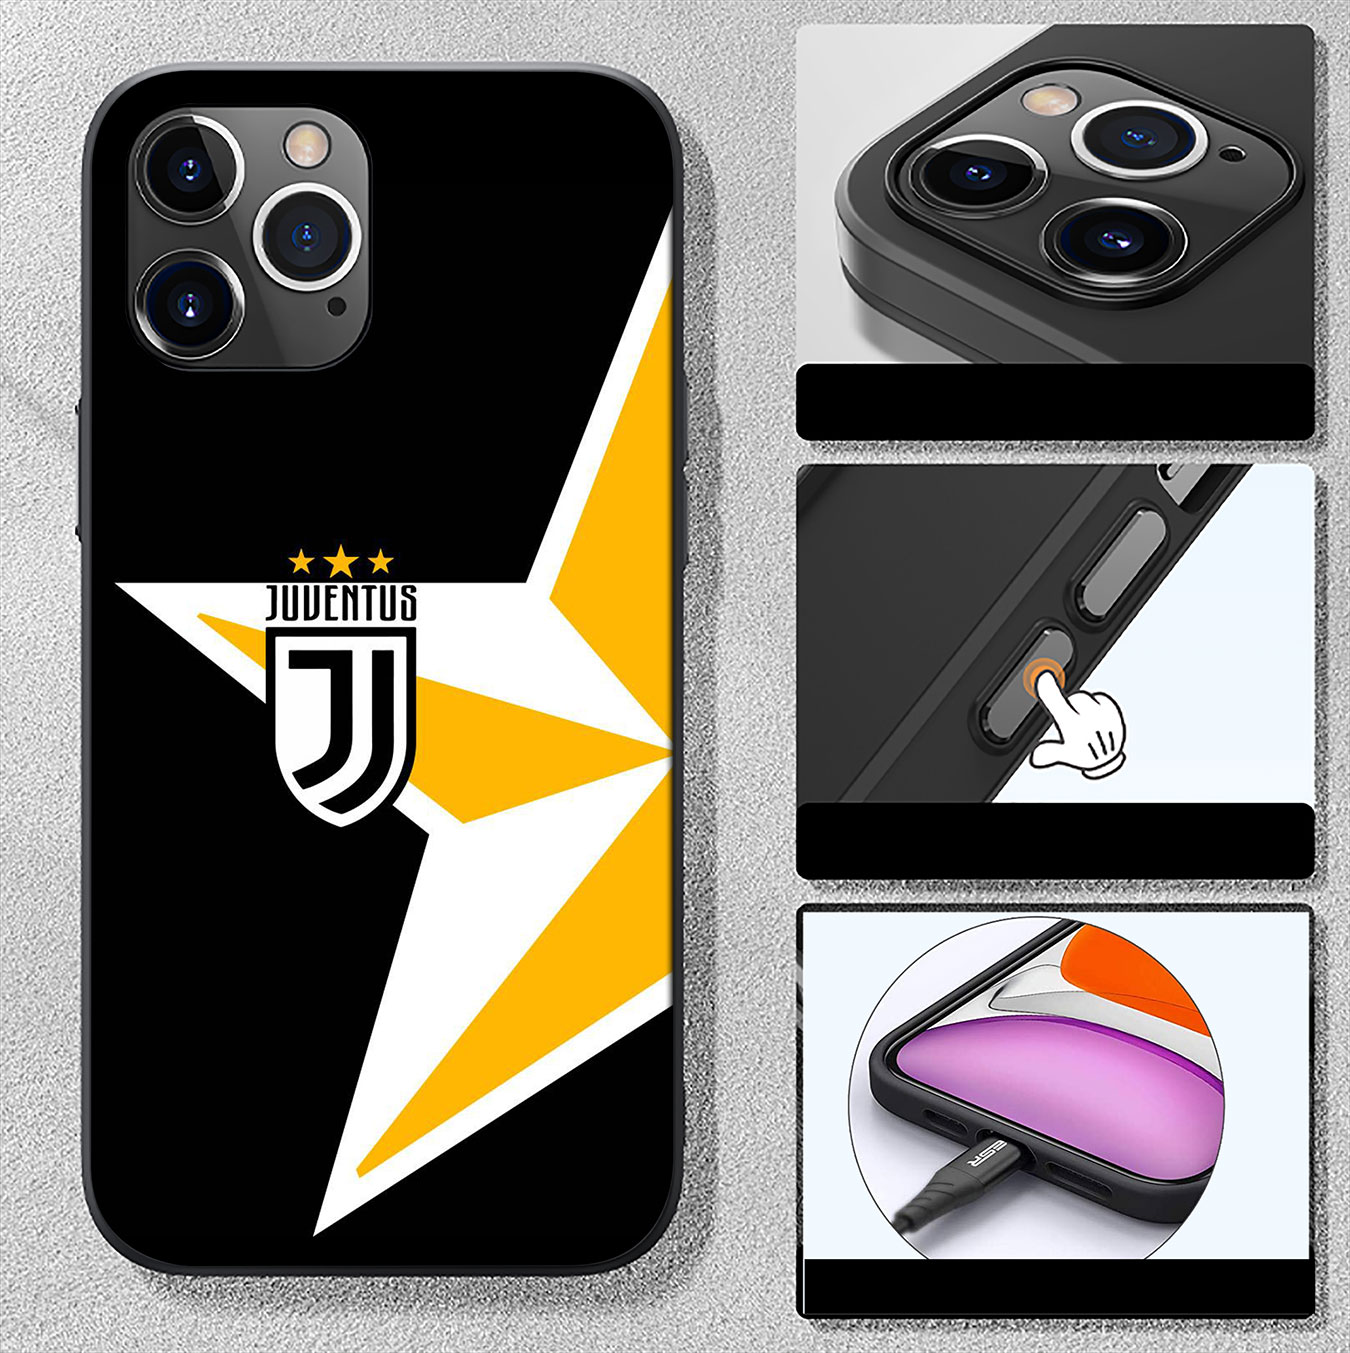 Ốp Điện Thoại Silicon Mềm Hình Logo Juventus K28 Cho Oppo Realme C2 C3 C11 6i 6 5 5s 5i 3 Pro Realmec3 Realmec2